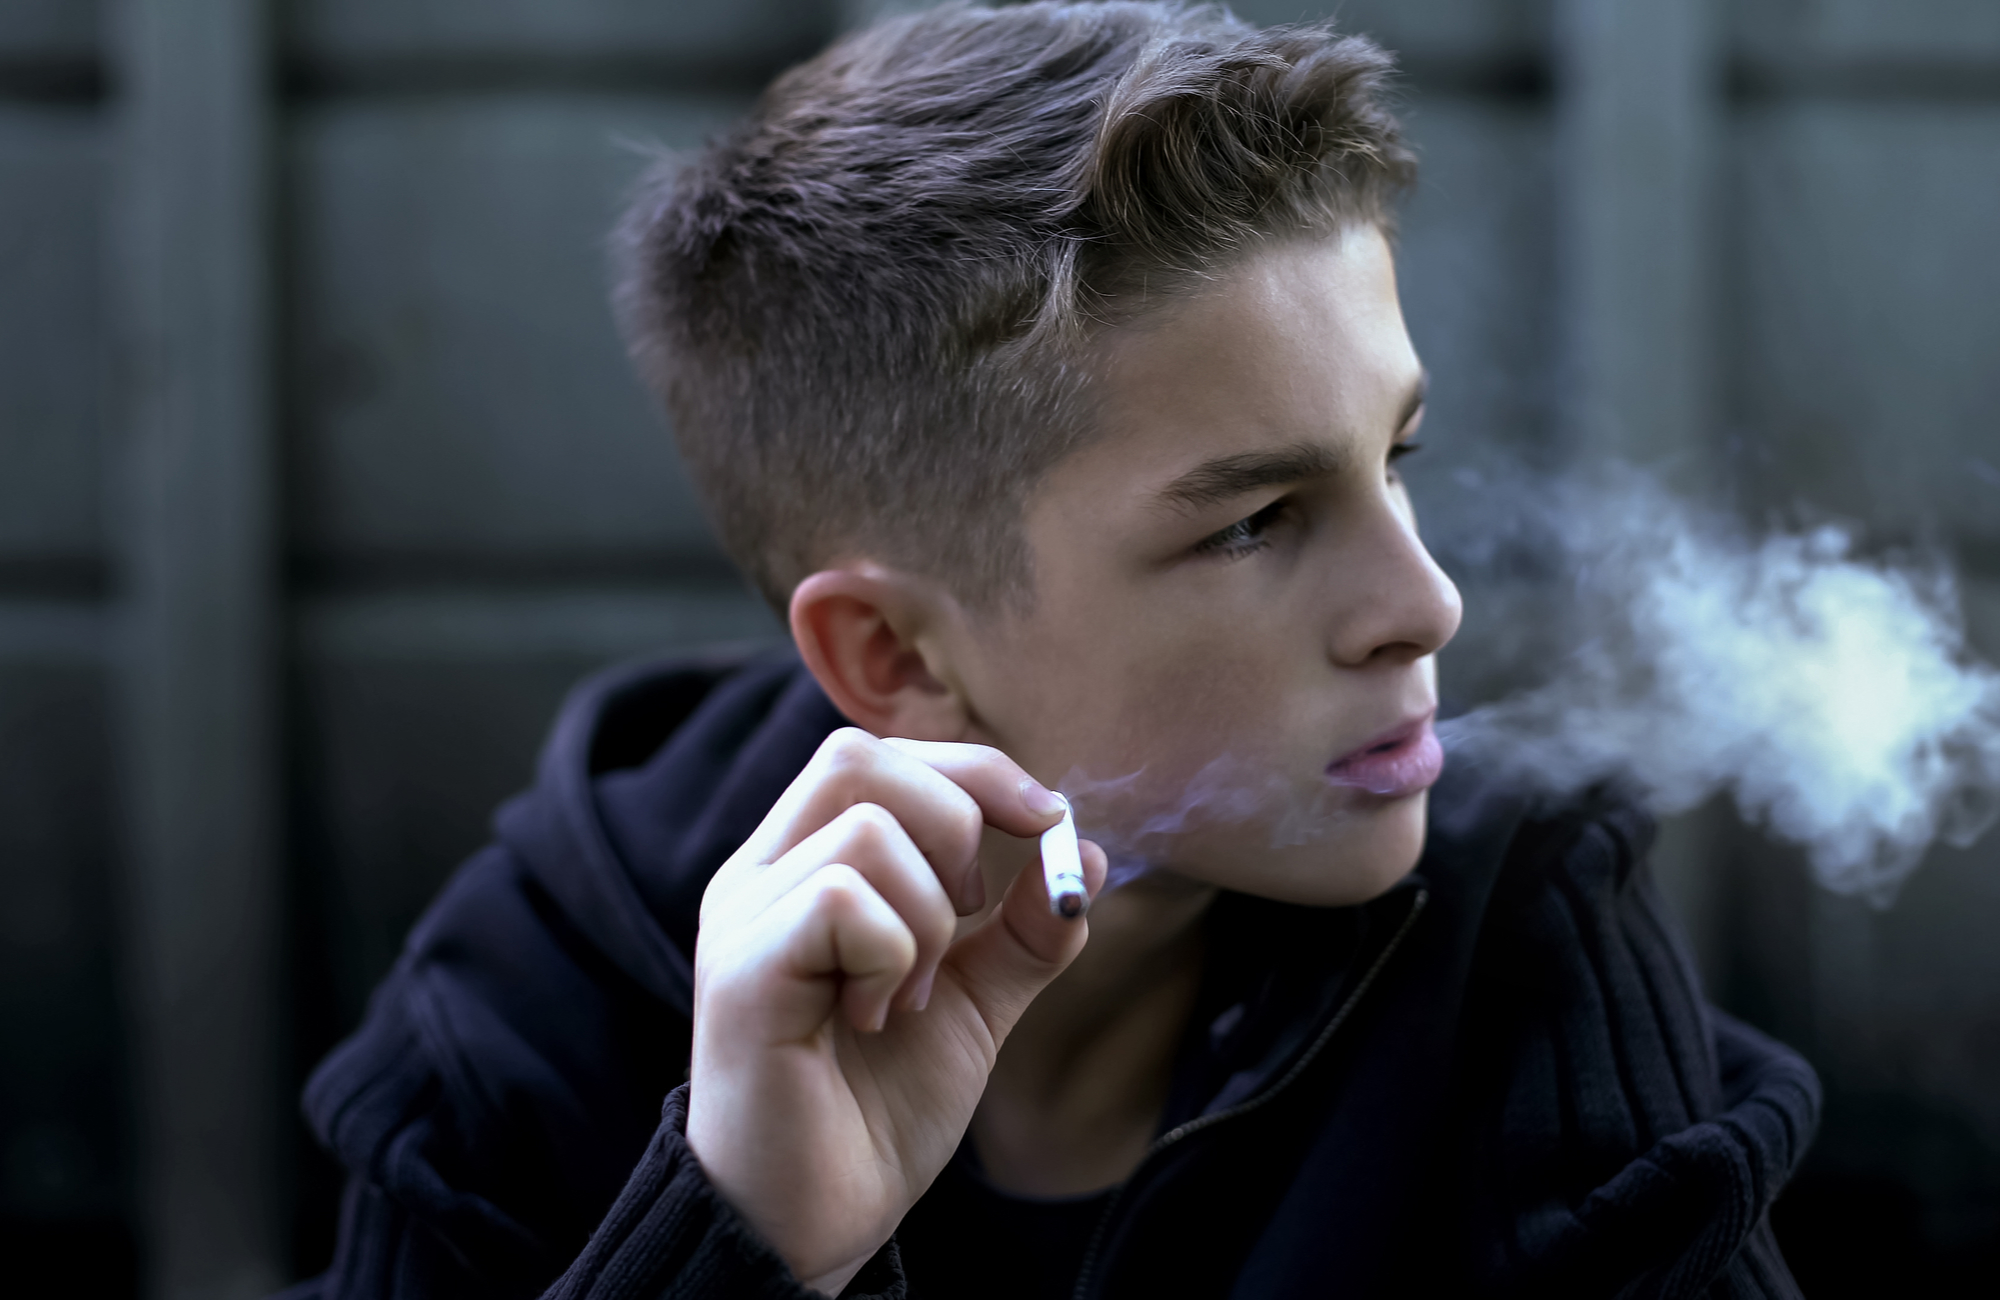 Teen smokes cigarette then sticks